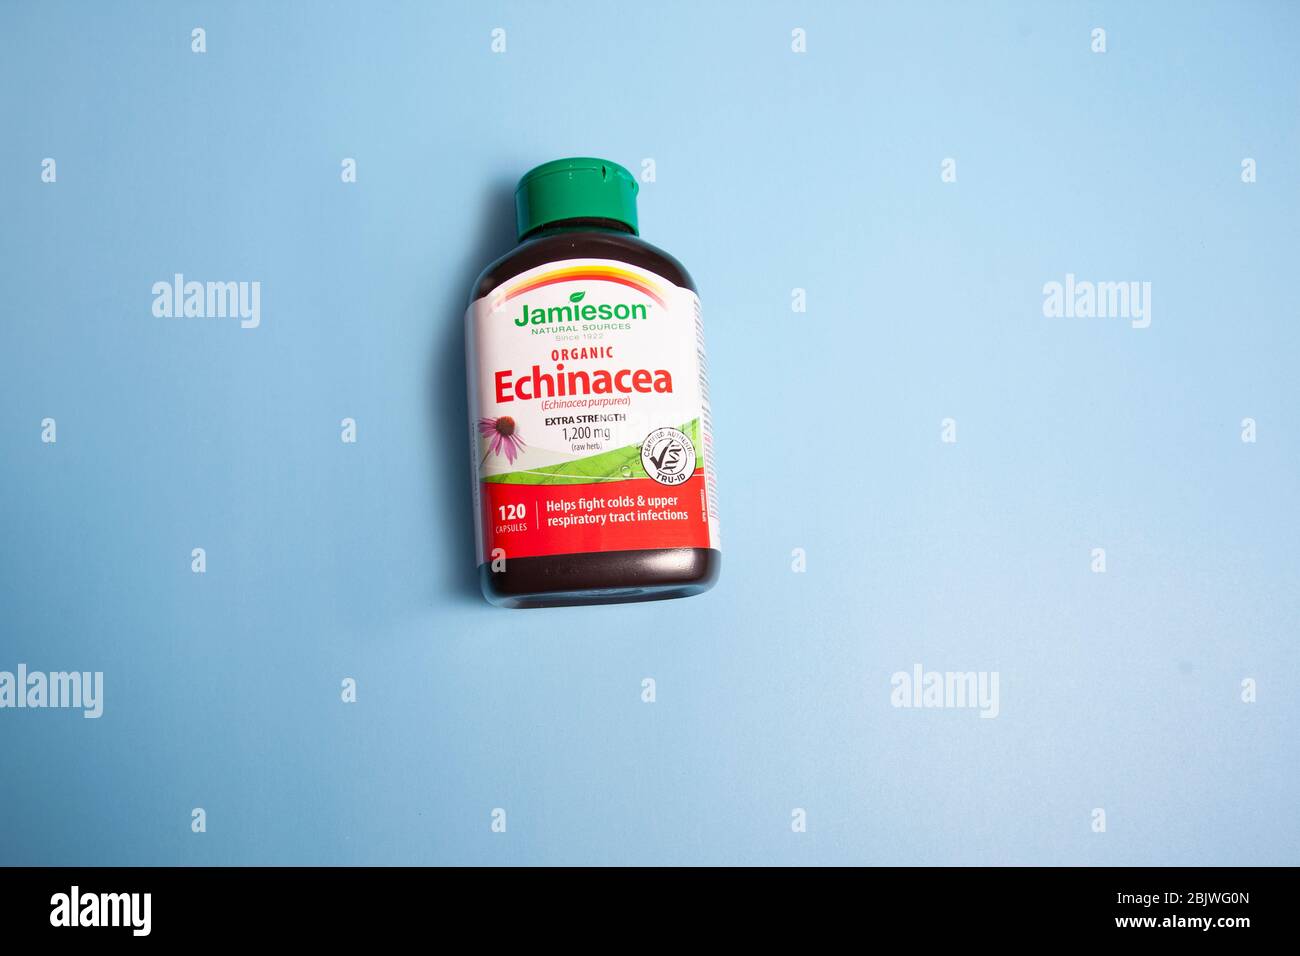 Halifax, Canada - 11 aprile 2020: Una bottiglia di vitamina Echinacea di marca Jamieson Foto Stock